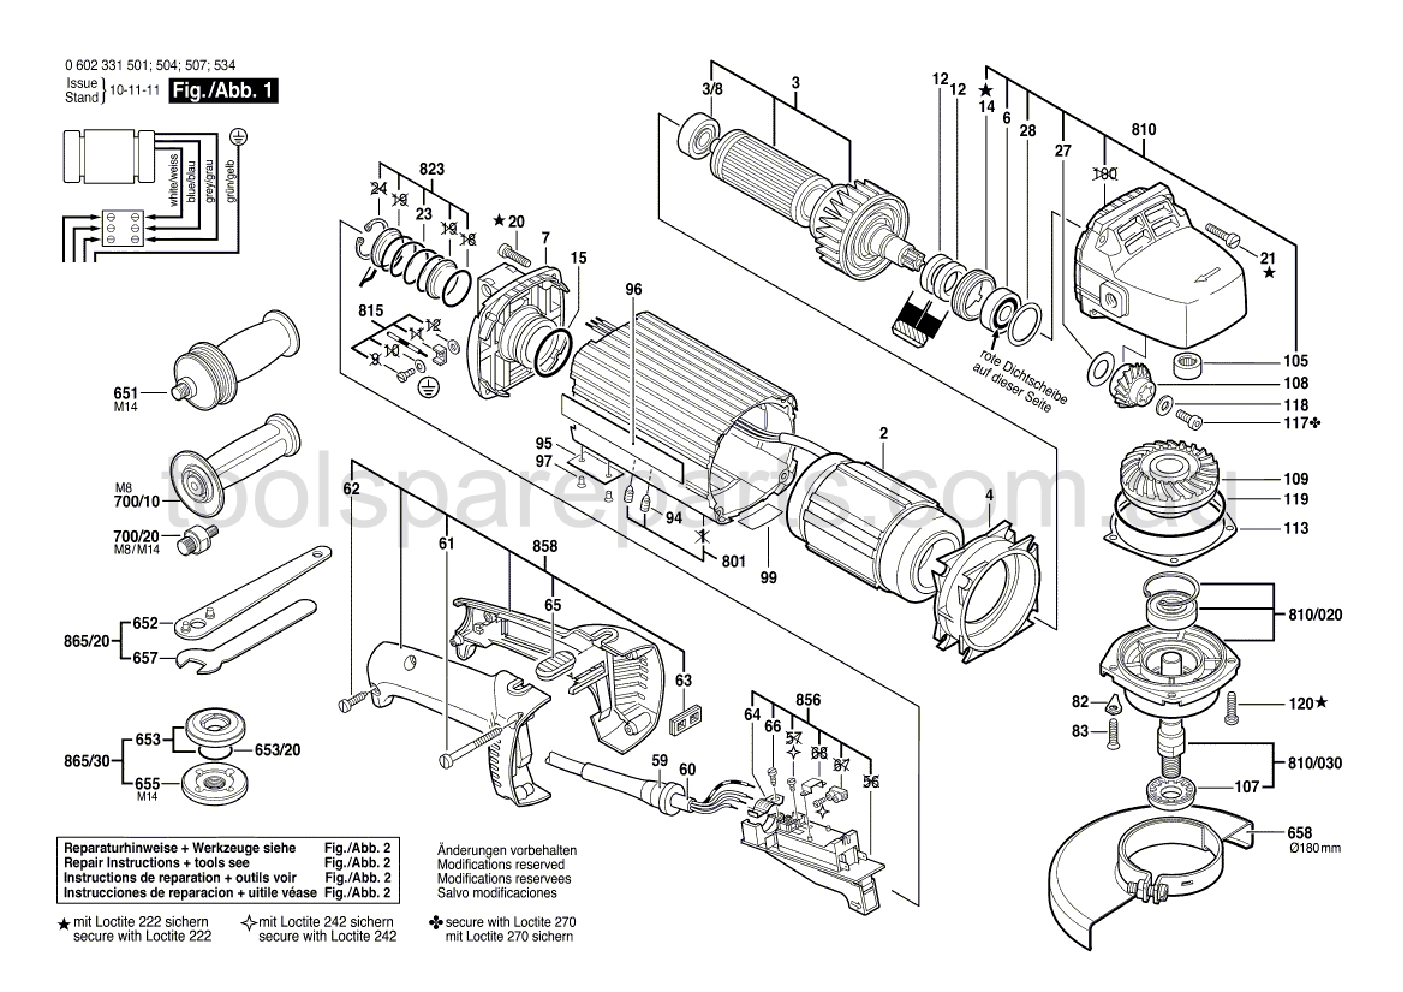 Bosch HWS 88/180 0602331504  Diagram 1